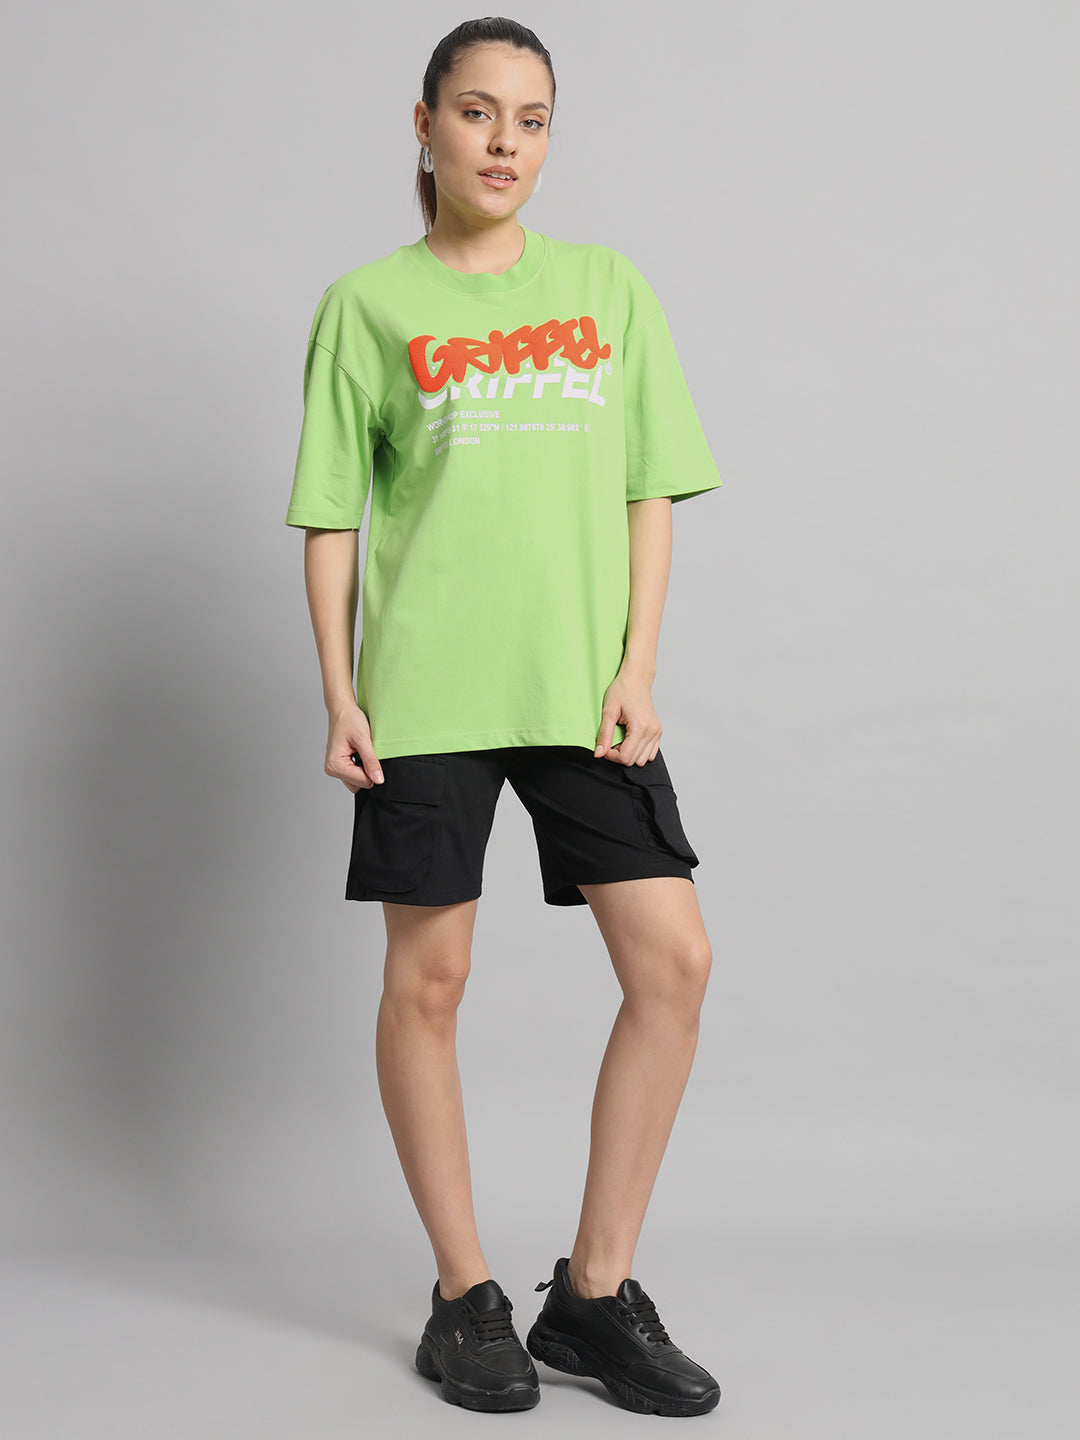 PUFF LOGO T-shirt and Short Set